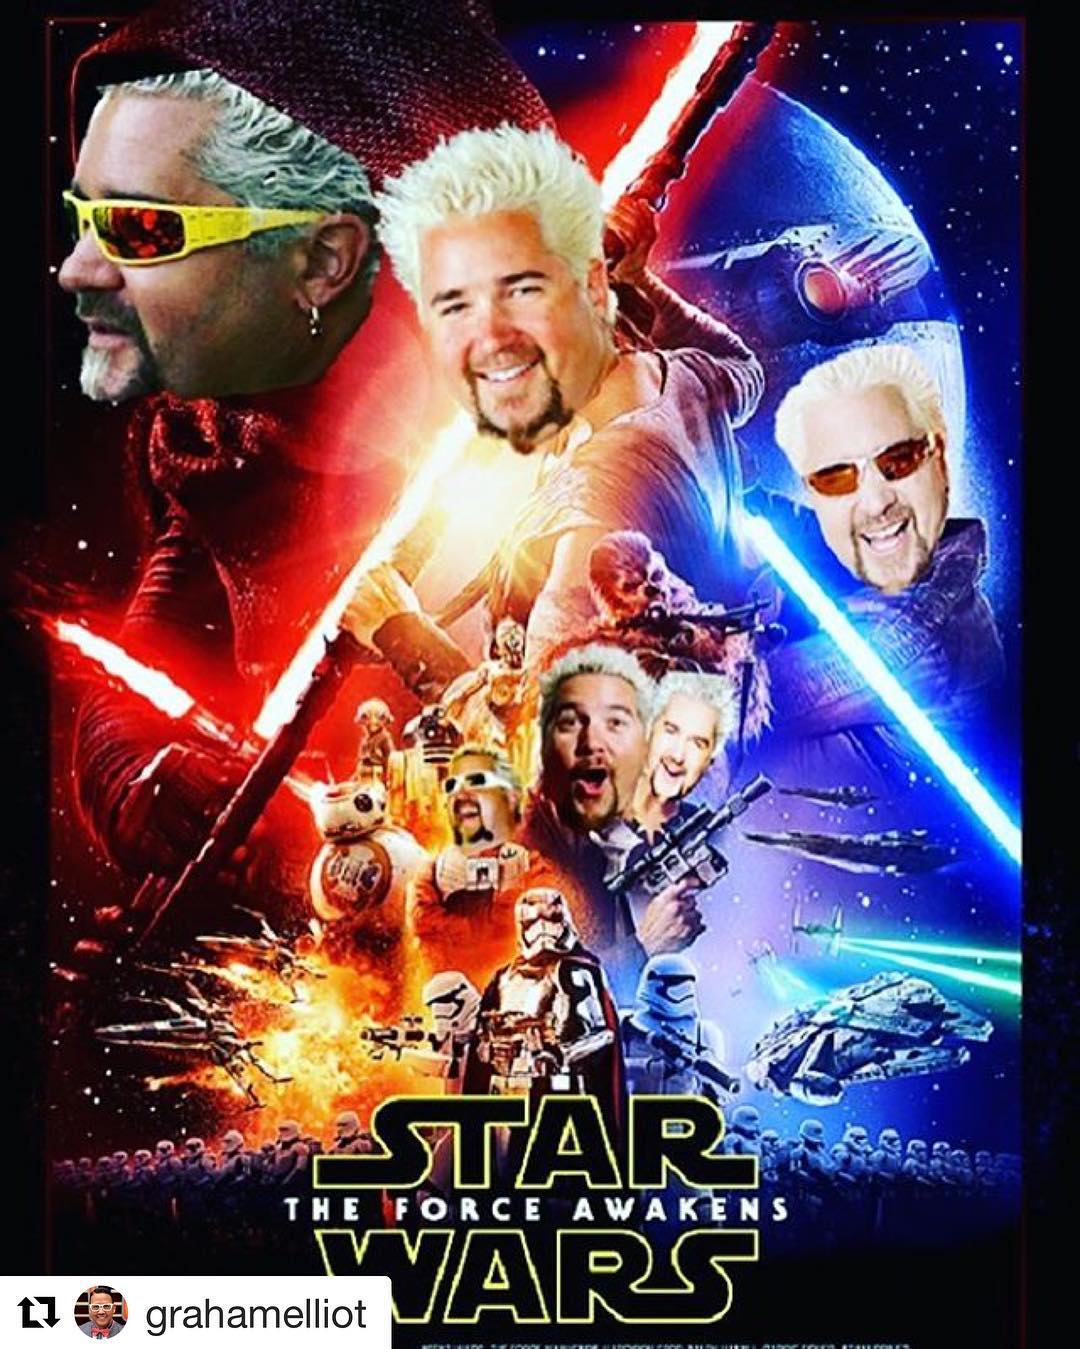 guy fieri crossover memes - star wars the force awakens